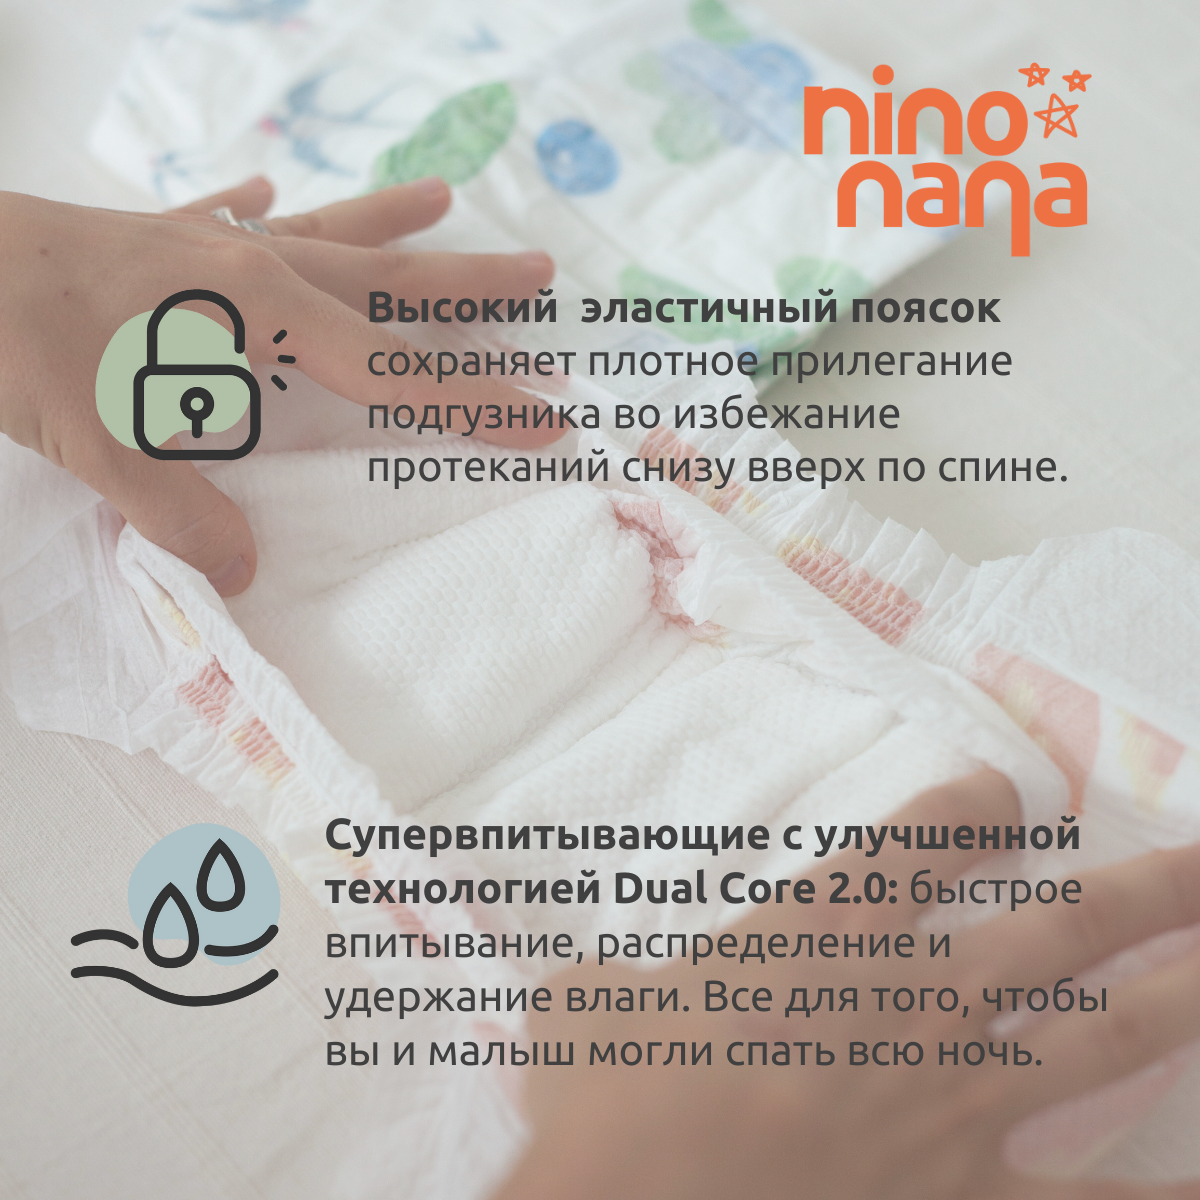 Подгузники Nino Nana Travel Pack NB 0-4 кг. 3 шт. - фото 6